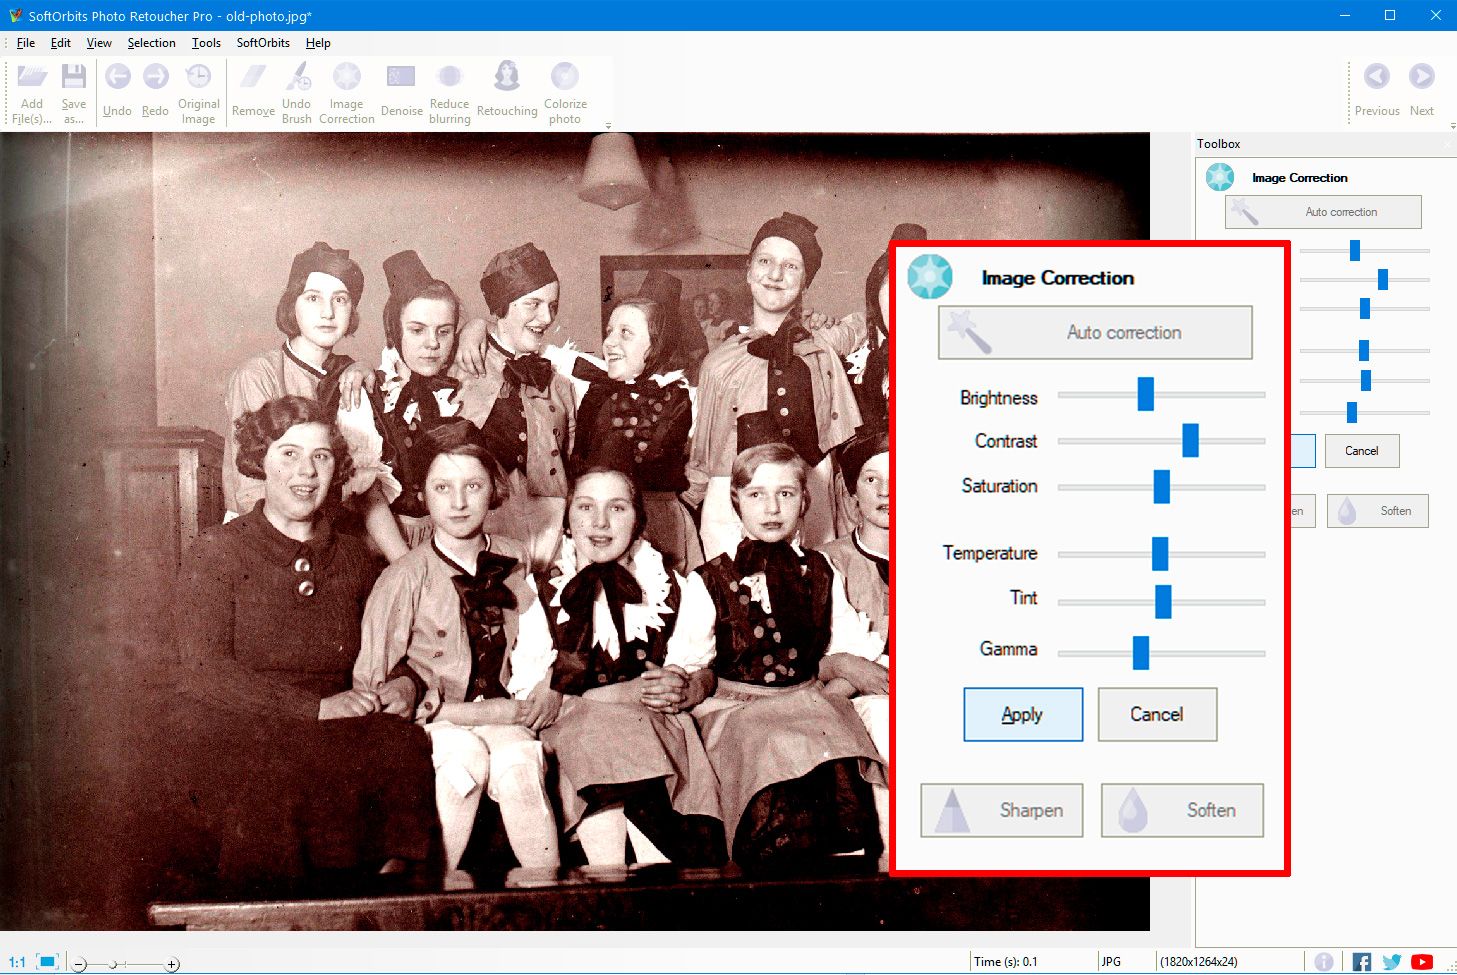 Select image correction in the Photo Retoucher program..